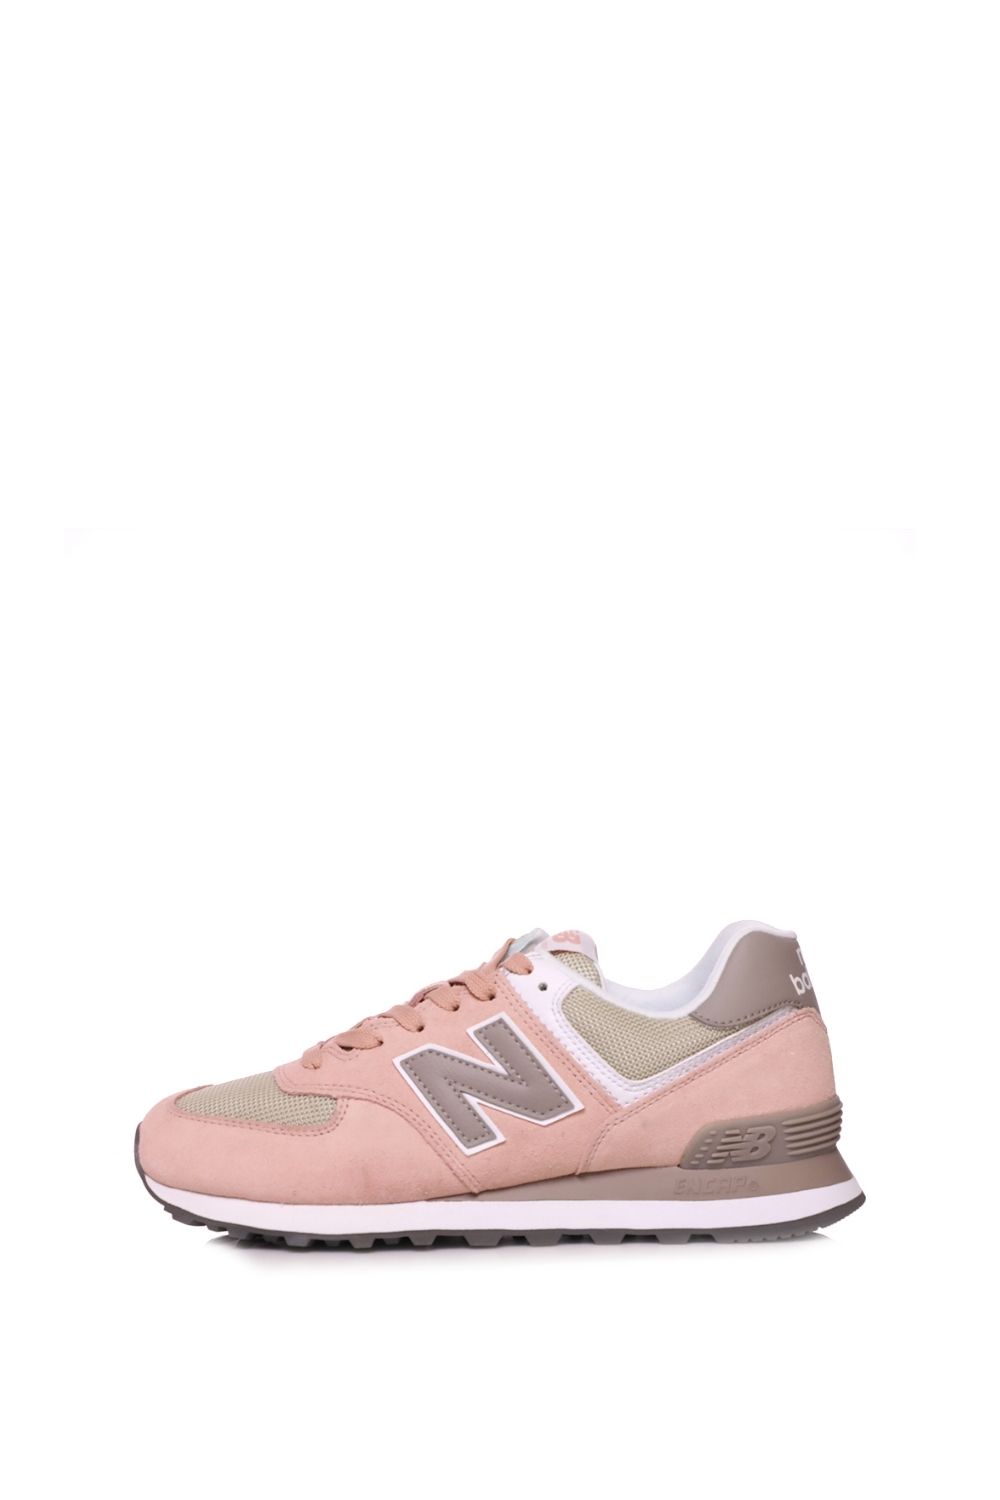 NEW BALANCE - Γυναικεία sneakers NEW BALANCE 574 ροζ Γυναικεία/Παπούτσια/Sneakers